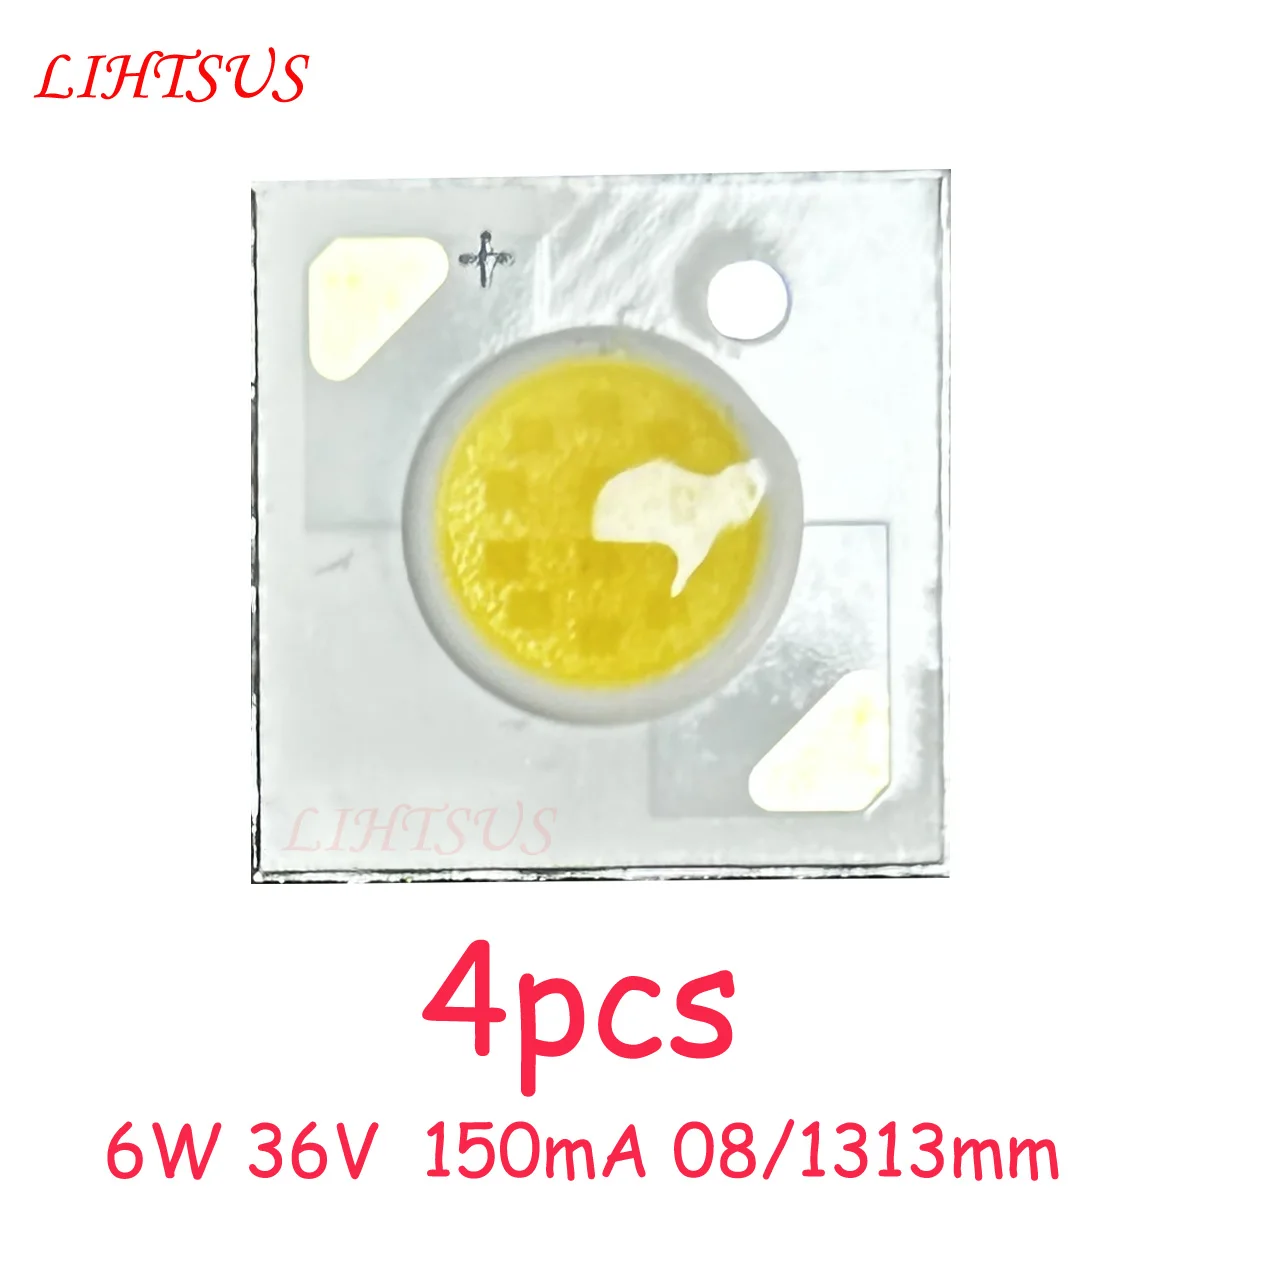 

4pcs Led Chip 6W 36V 150mA 2700K 3000K 3500K 4000K 95cri Led For Intenior Downlight Projection Lamp Gu10